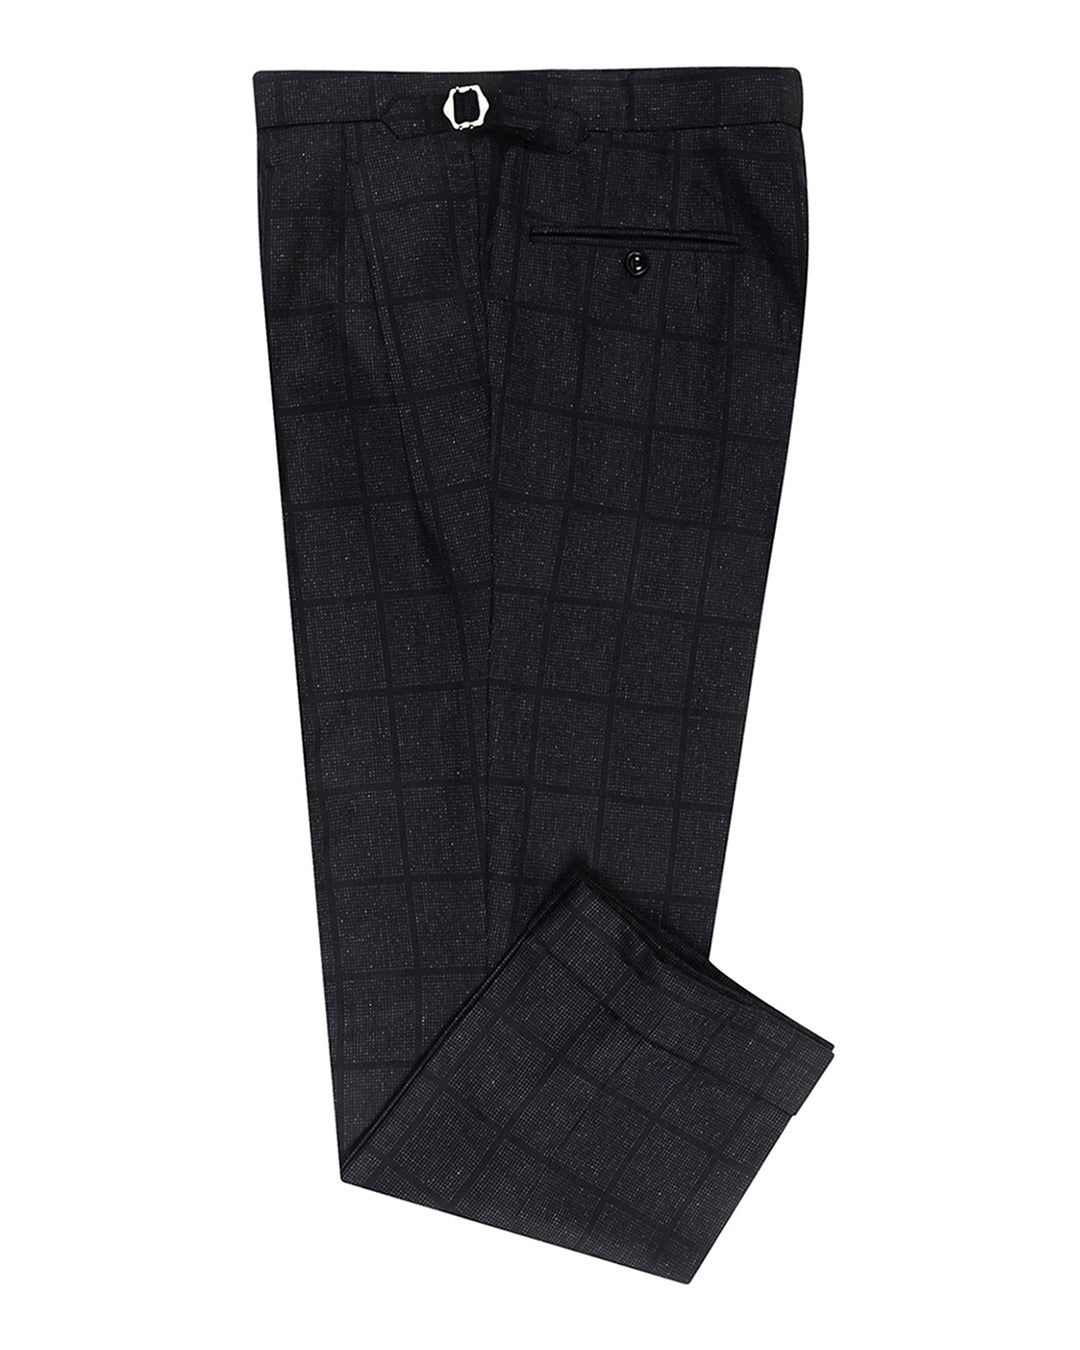 EThomas Wool Silk Cashmere: Black Windowpane